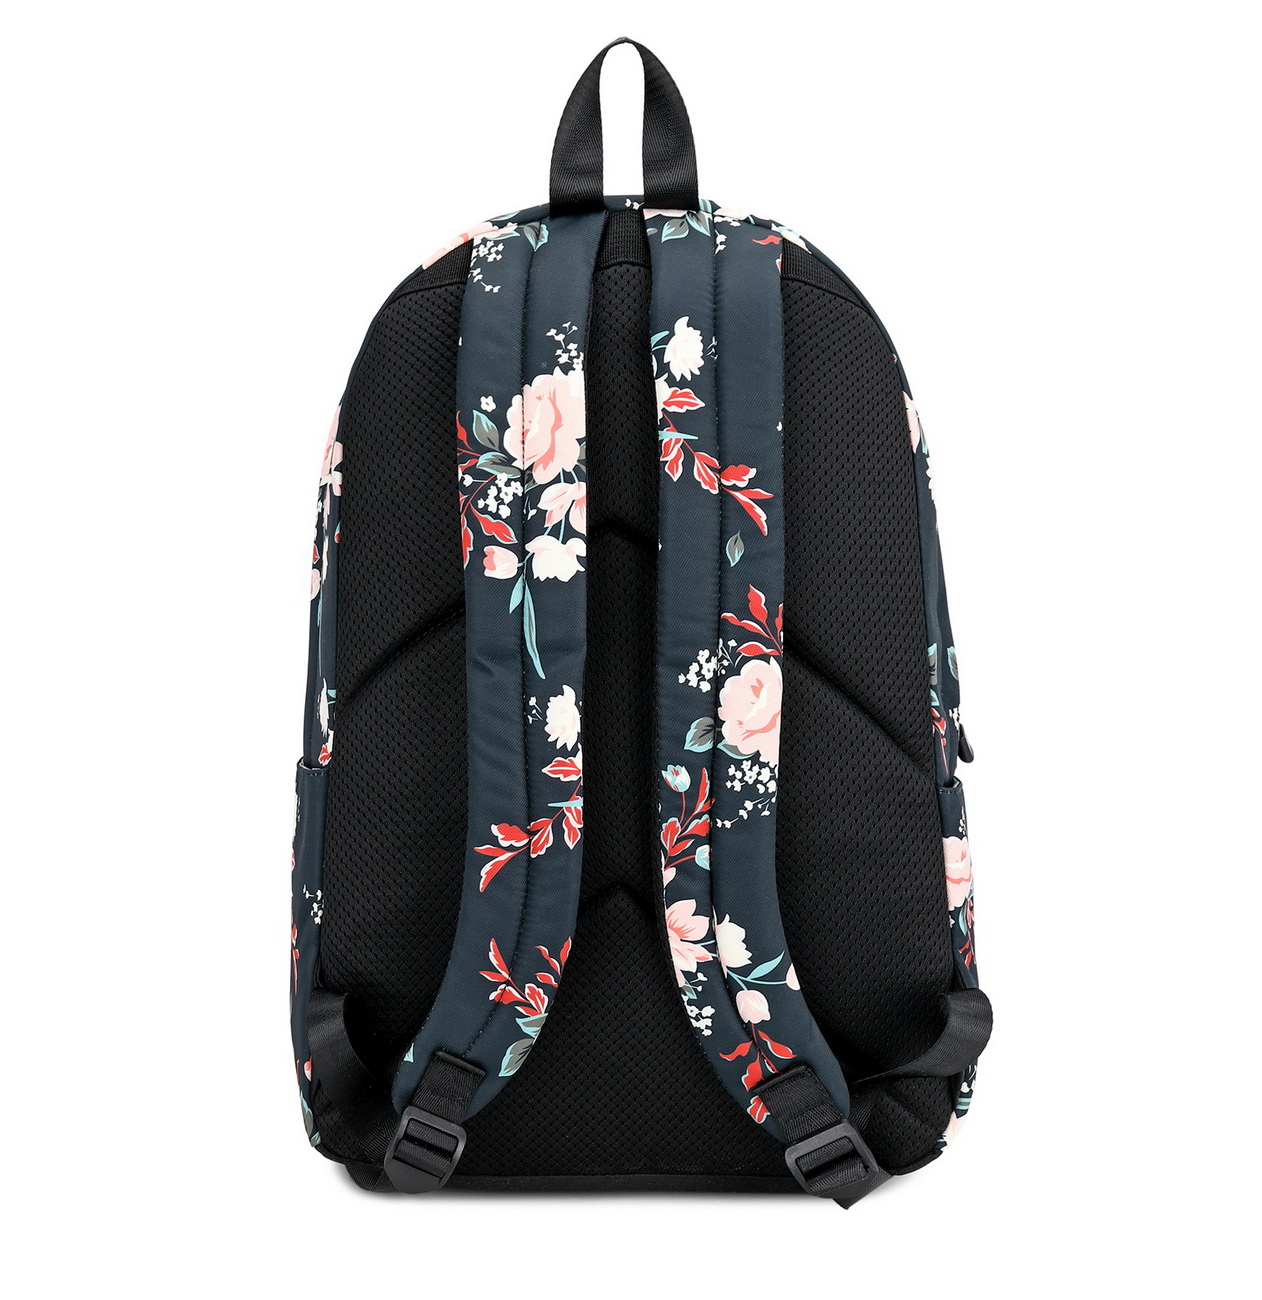 ALLVIPER Waterproof Flower Backpack for Women